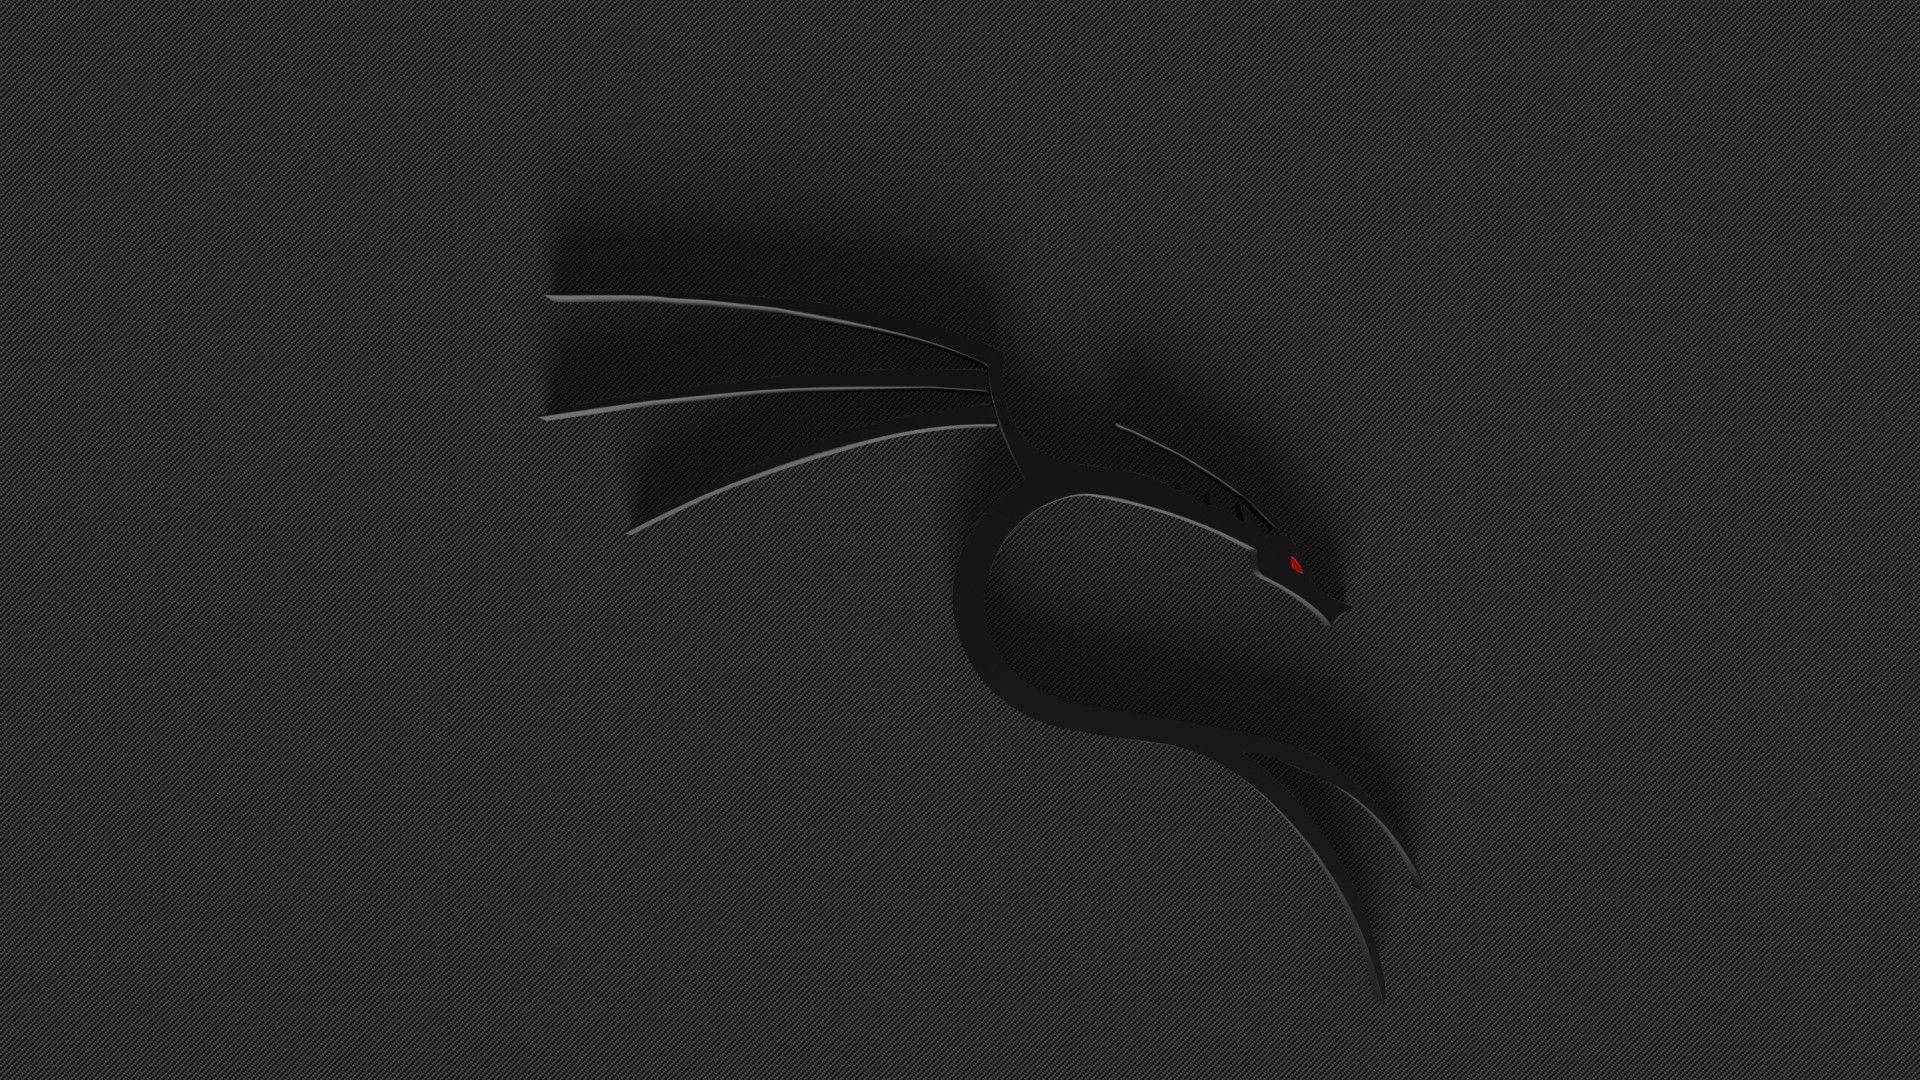 3d Kali Linux Dragon Background